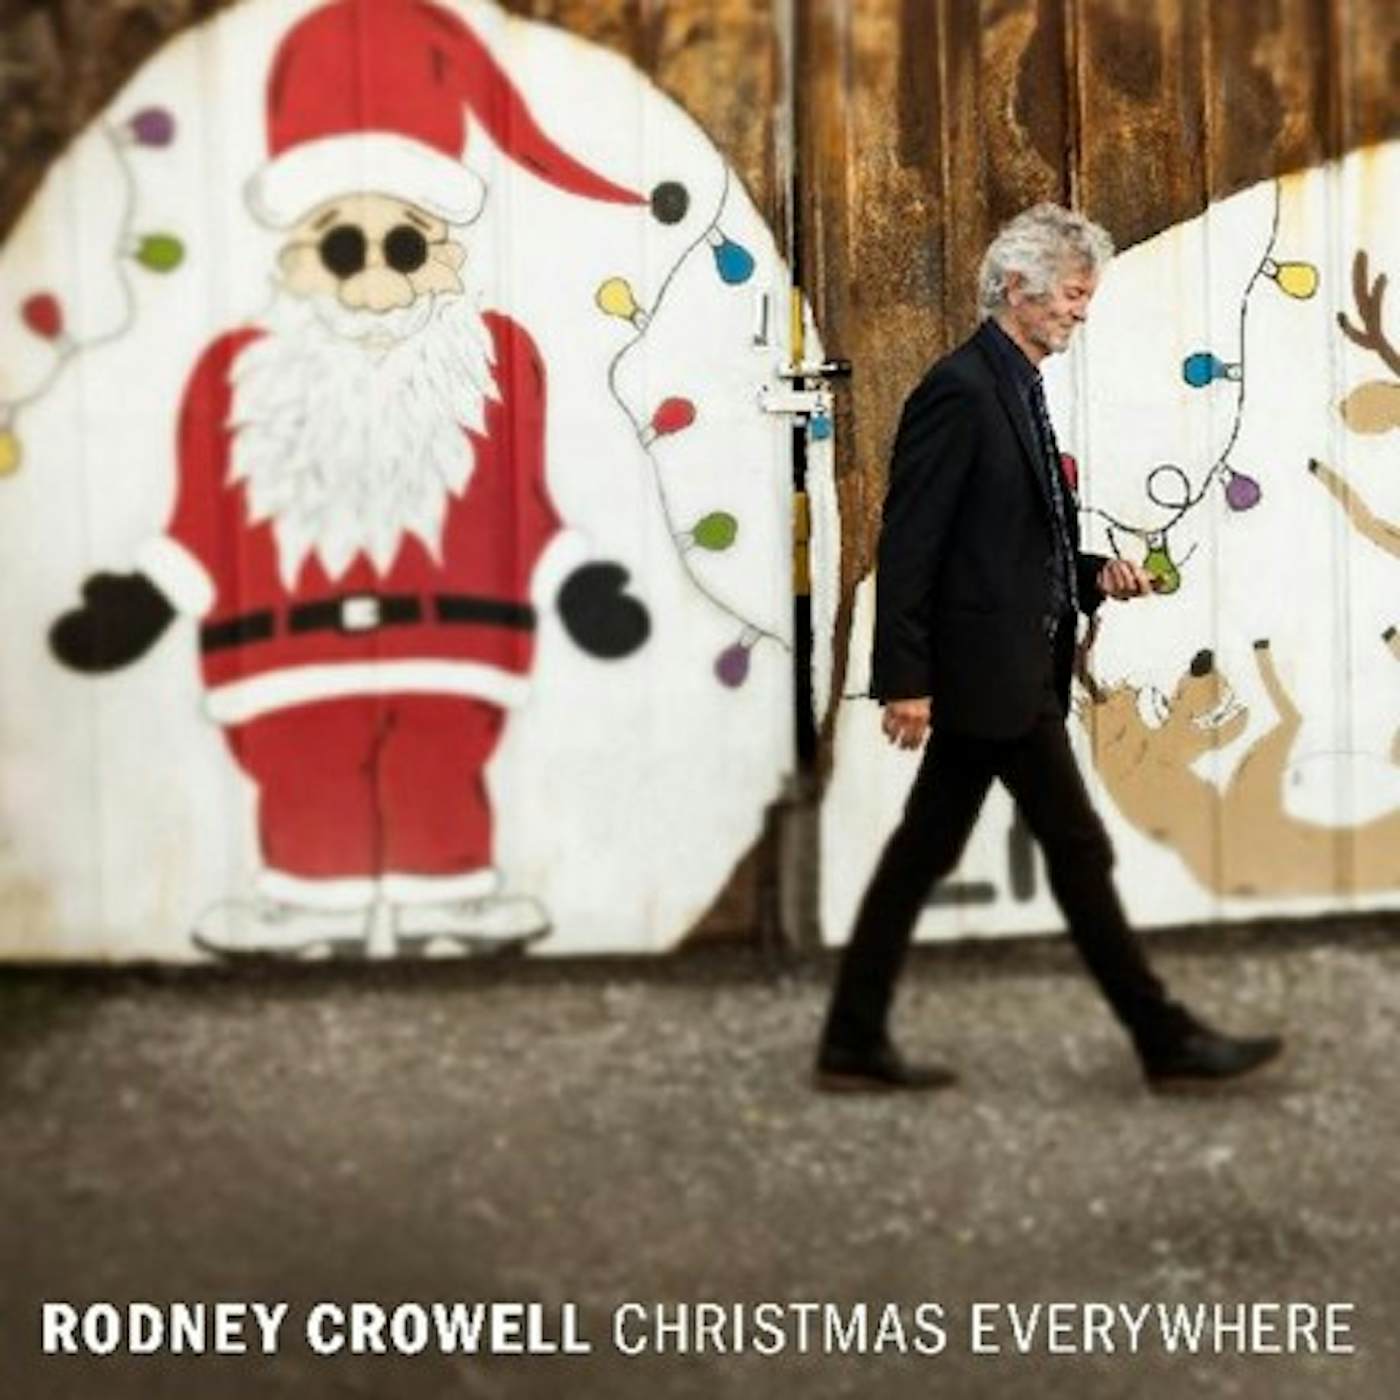 Rodney Crowell CHRISTMAS EVERYWHERE CD